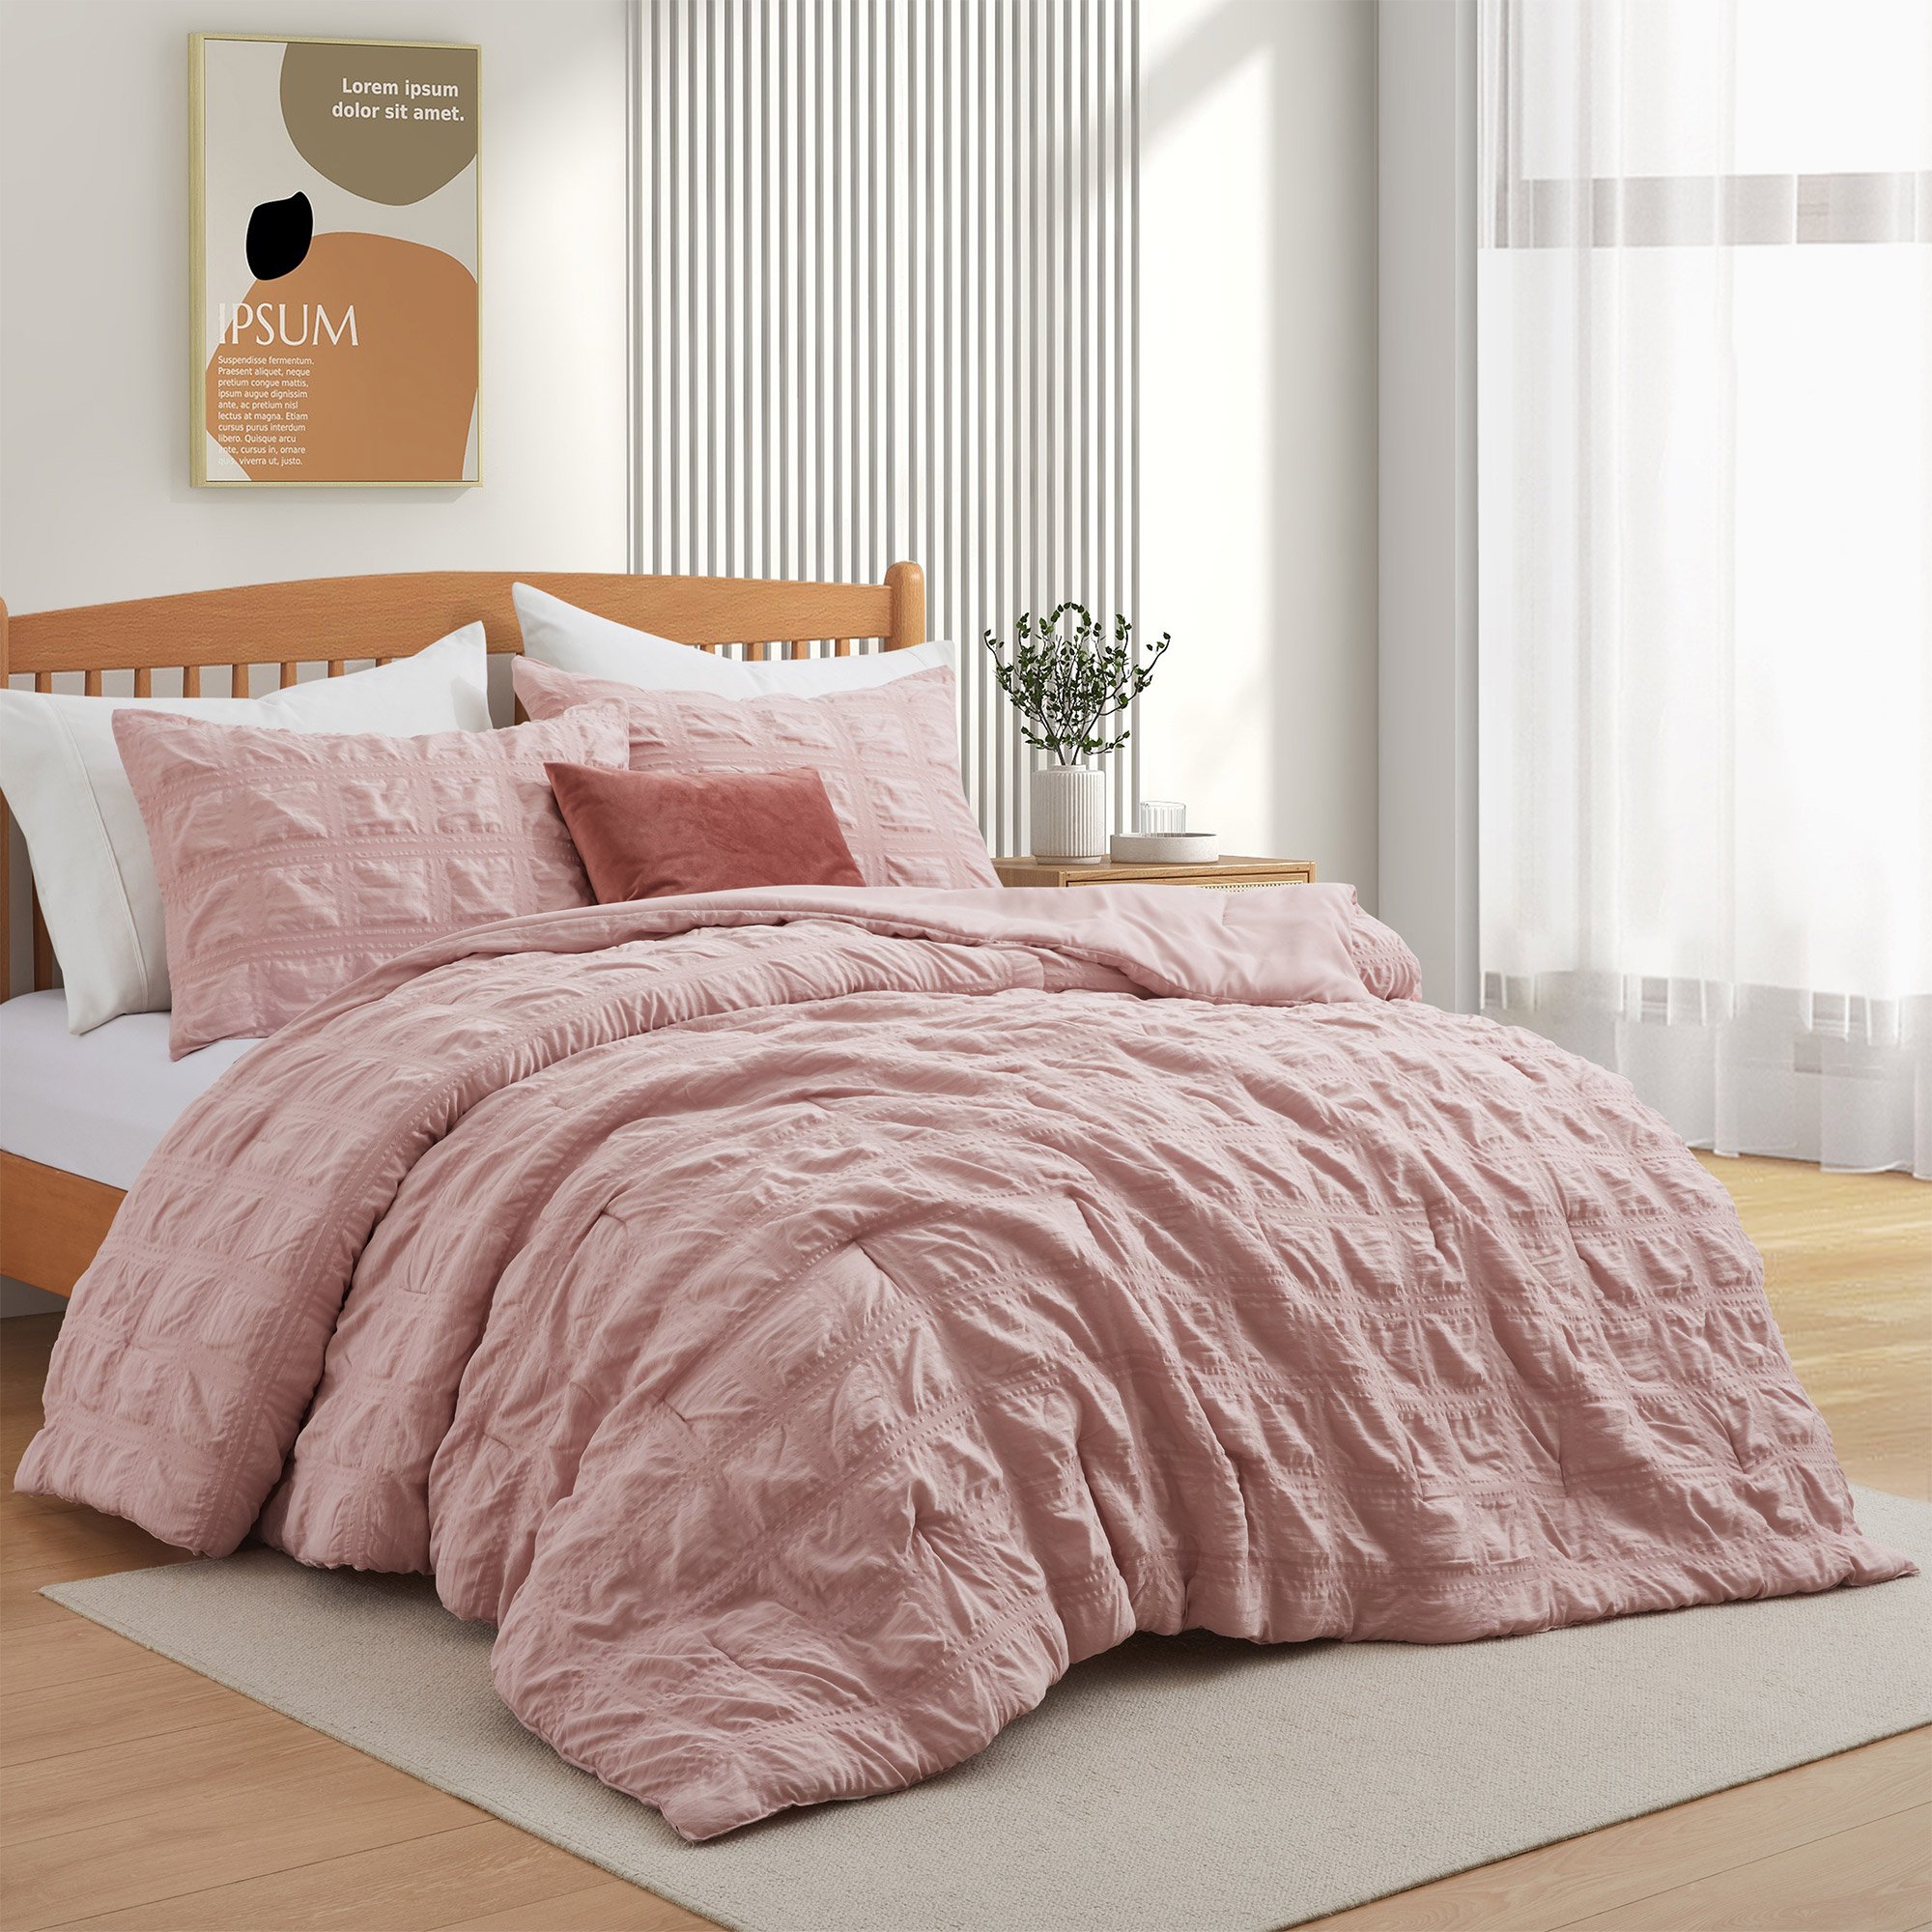 All Season Crinkle Textured Down Alternative Comforter Set-Seersucker Bedding Set - Pink, Twin